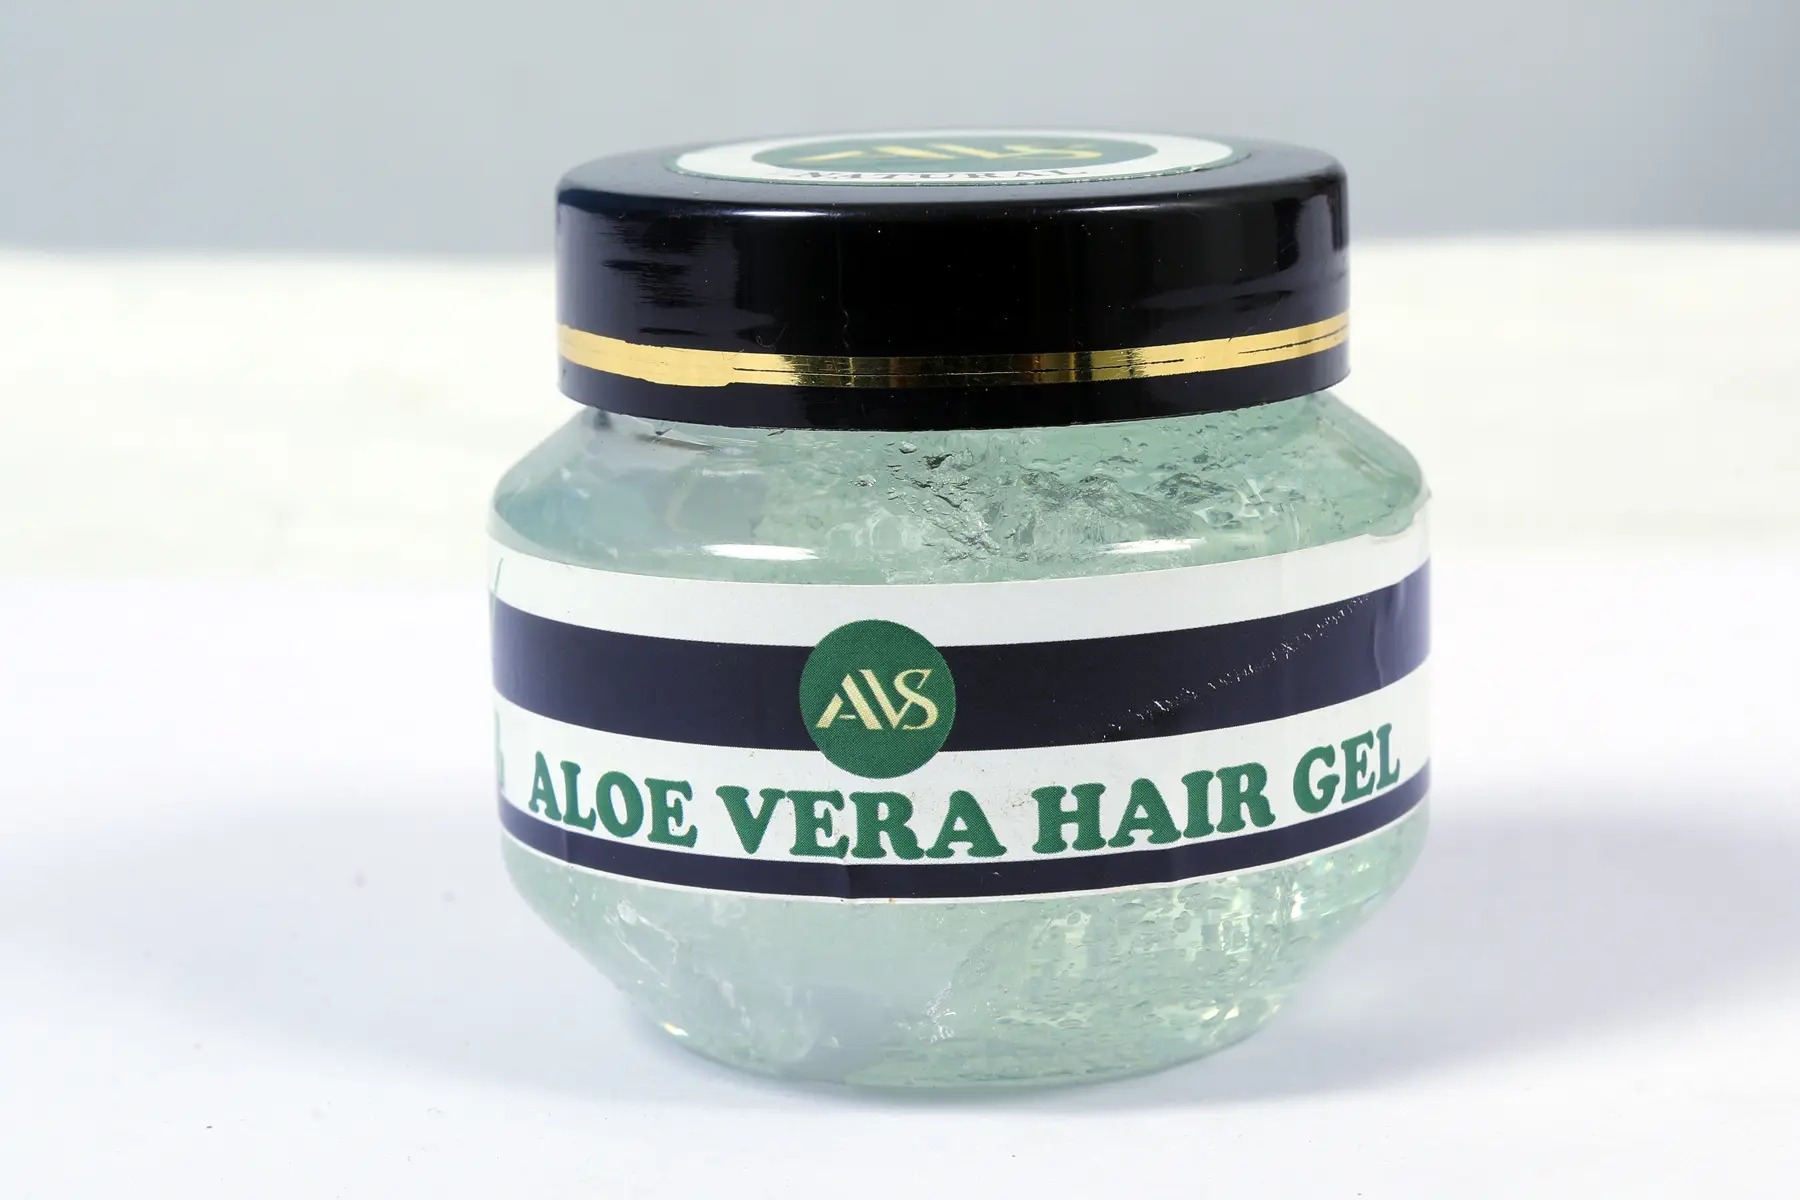 AVS Aloe Vera Hair Gel